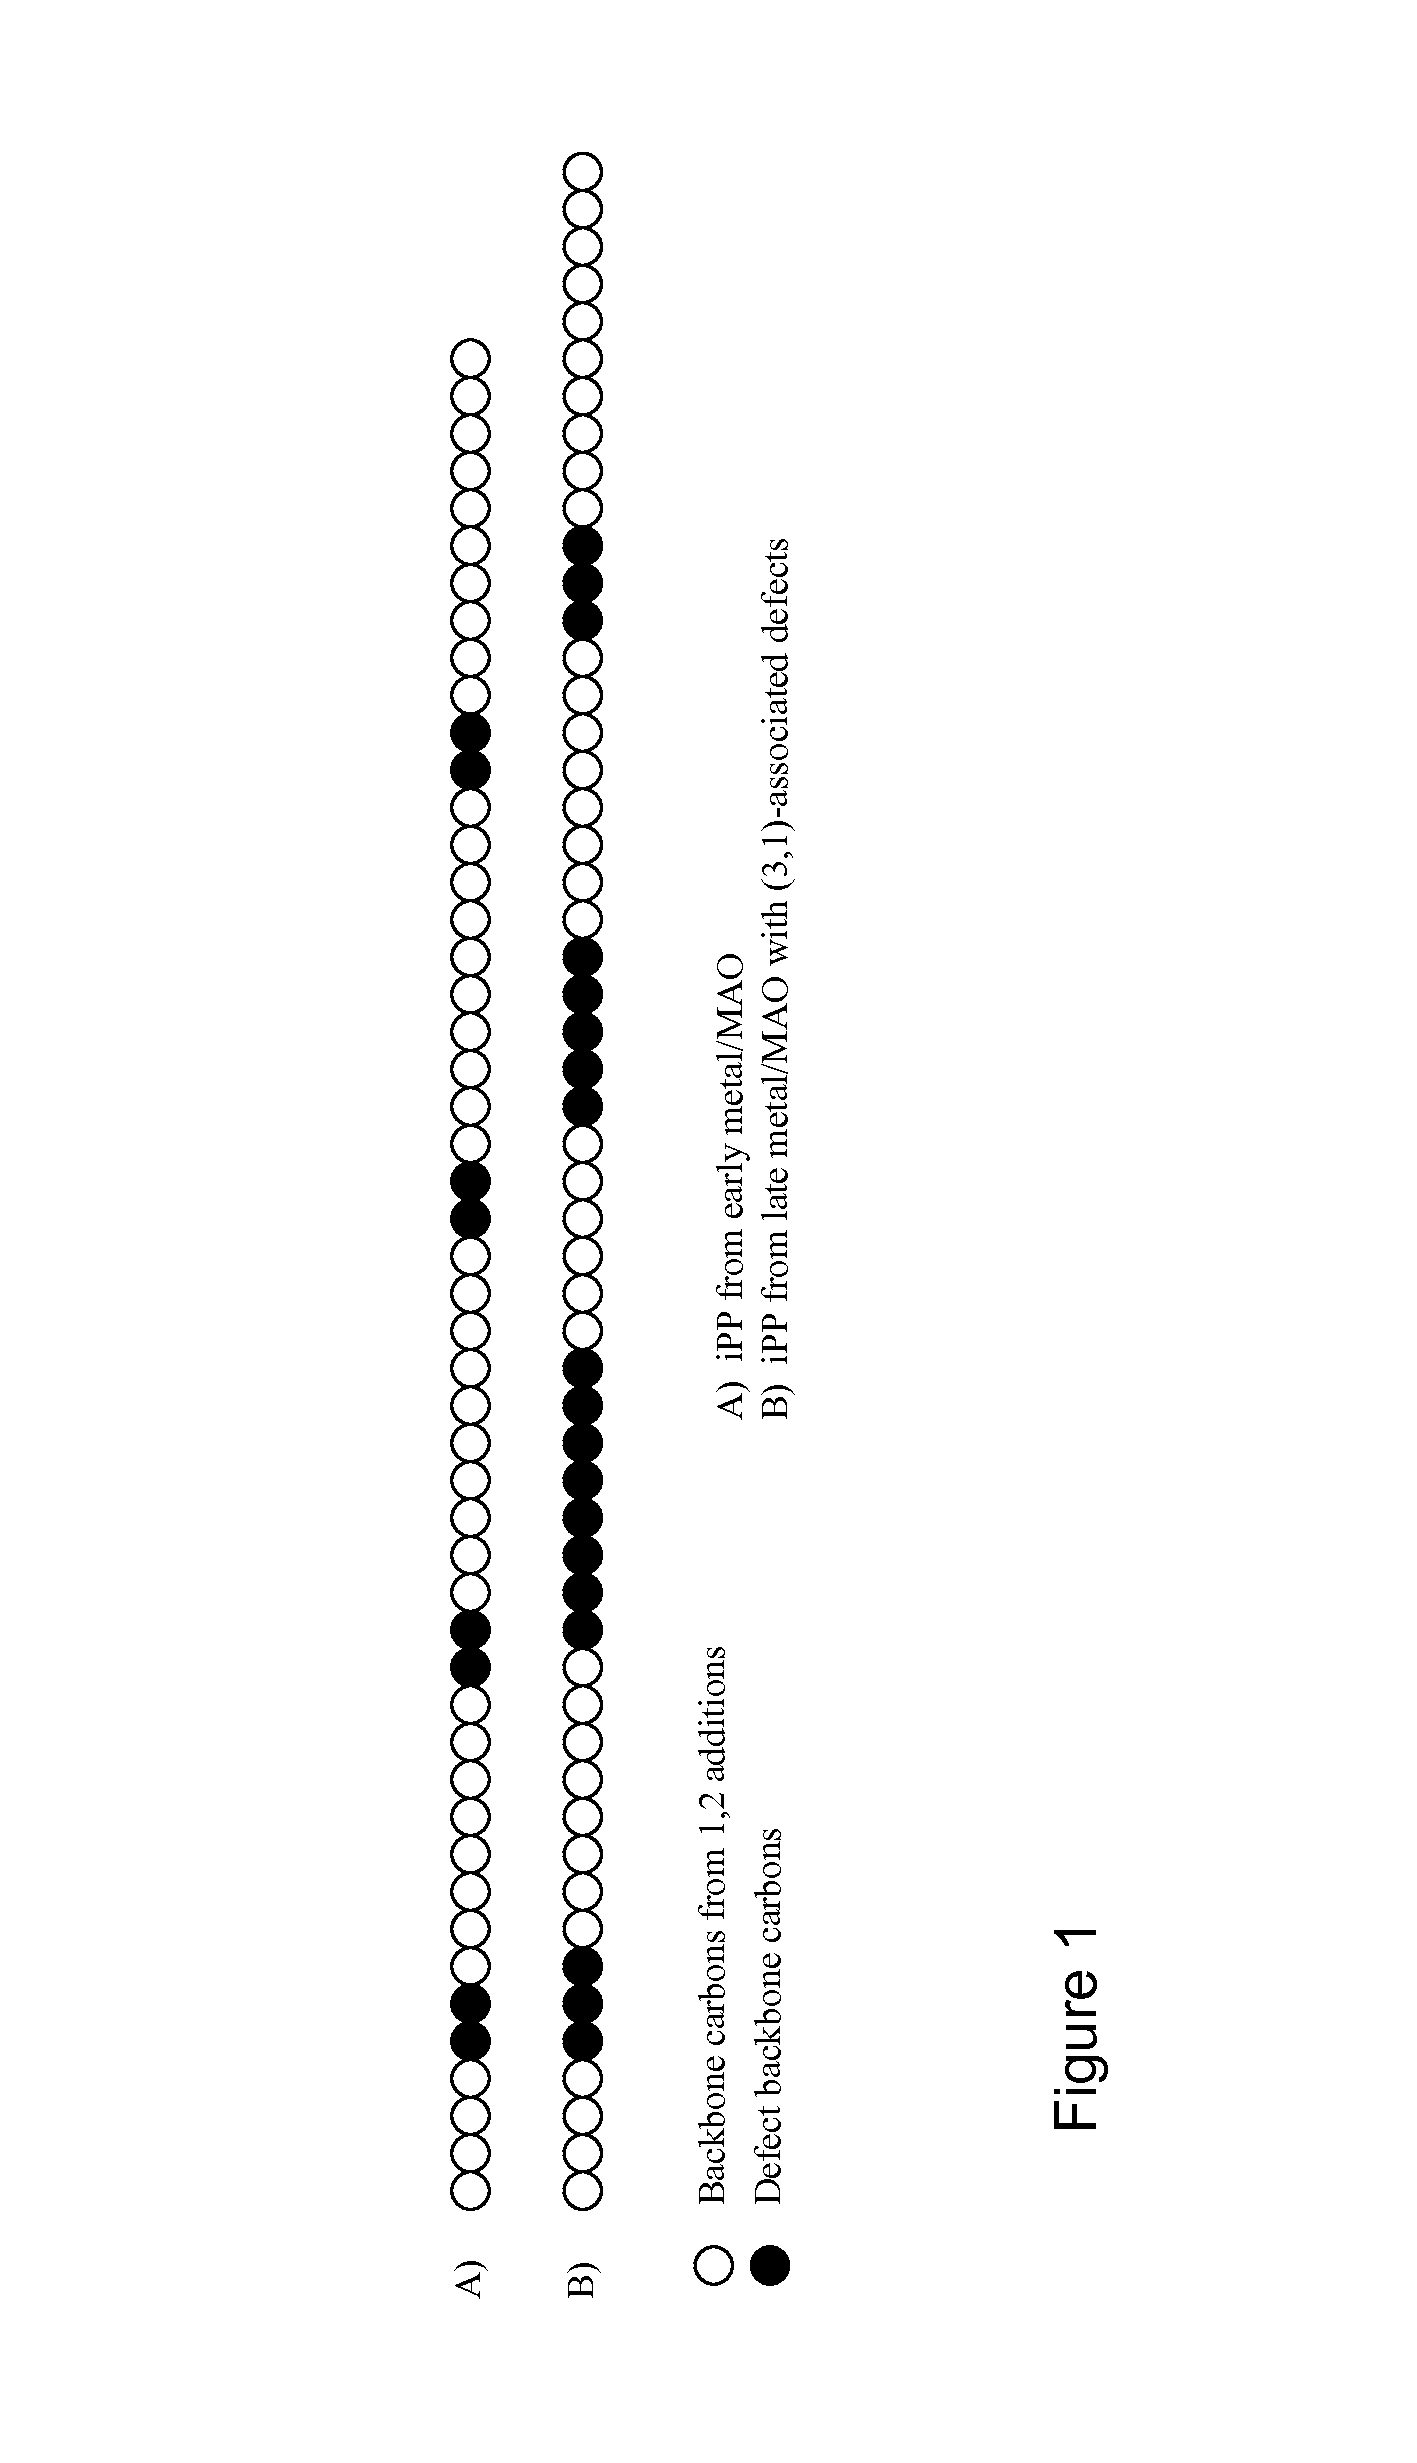 Polyolefins having reduced crystallinity